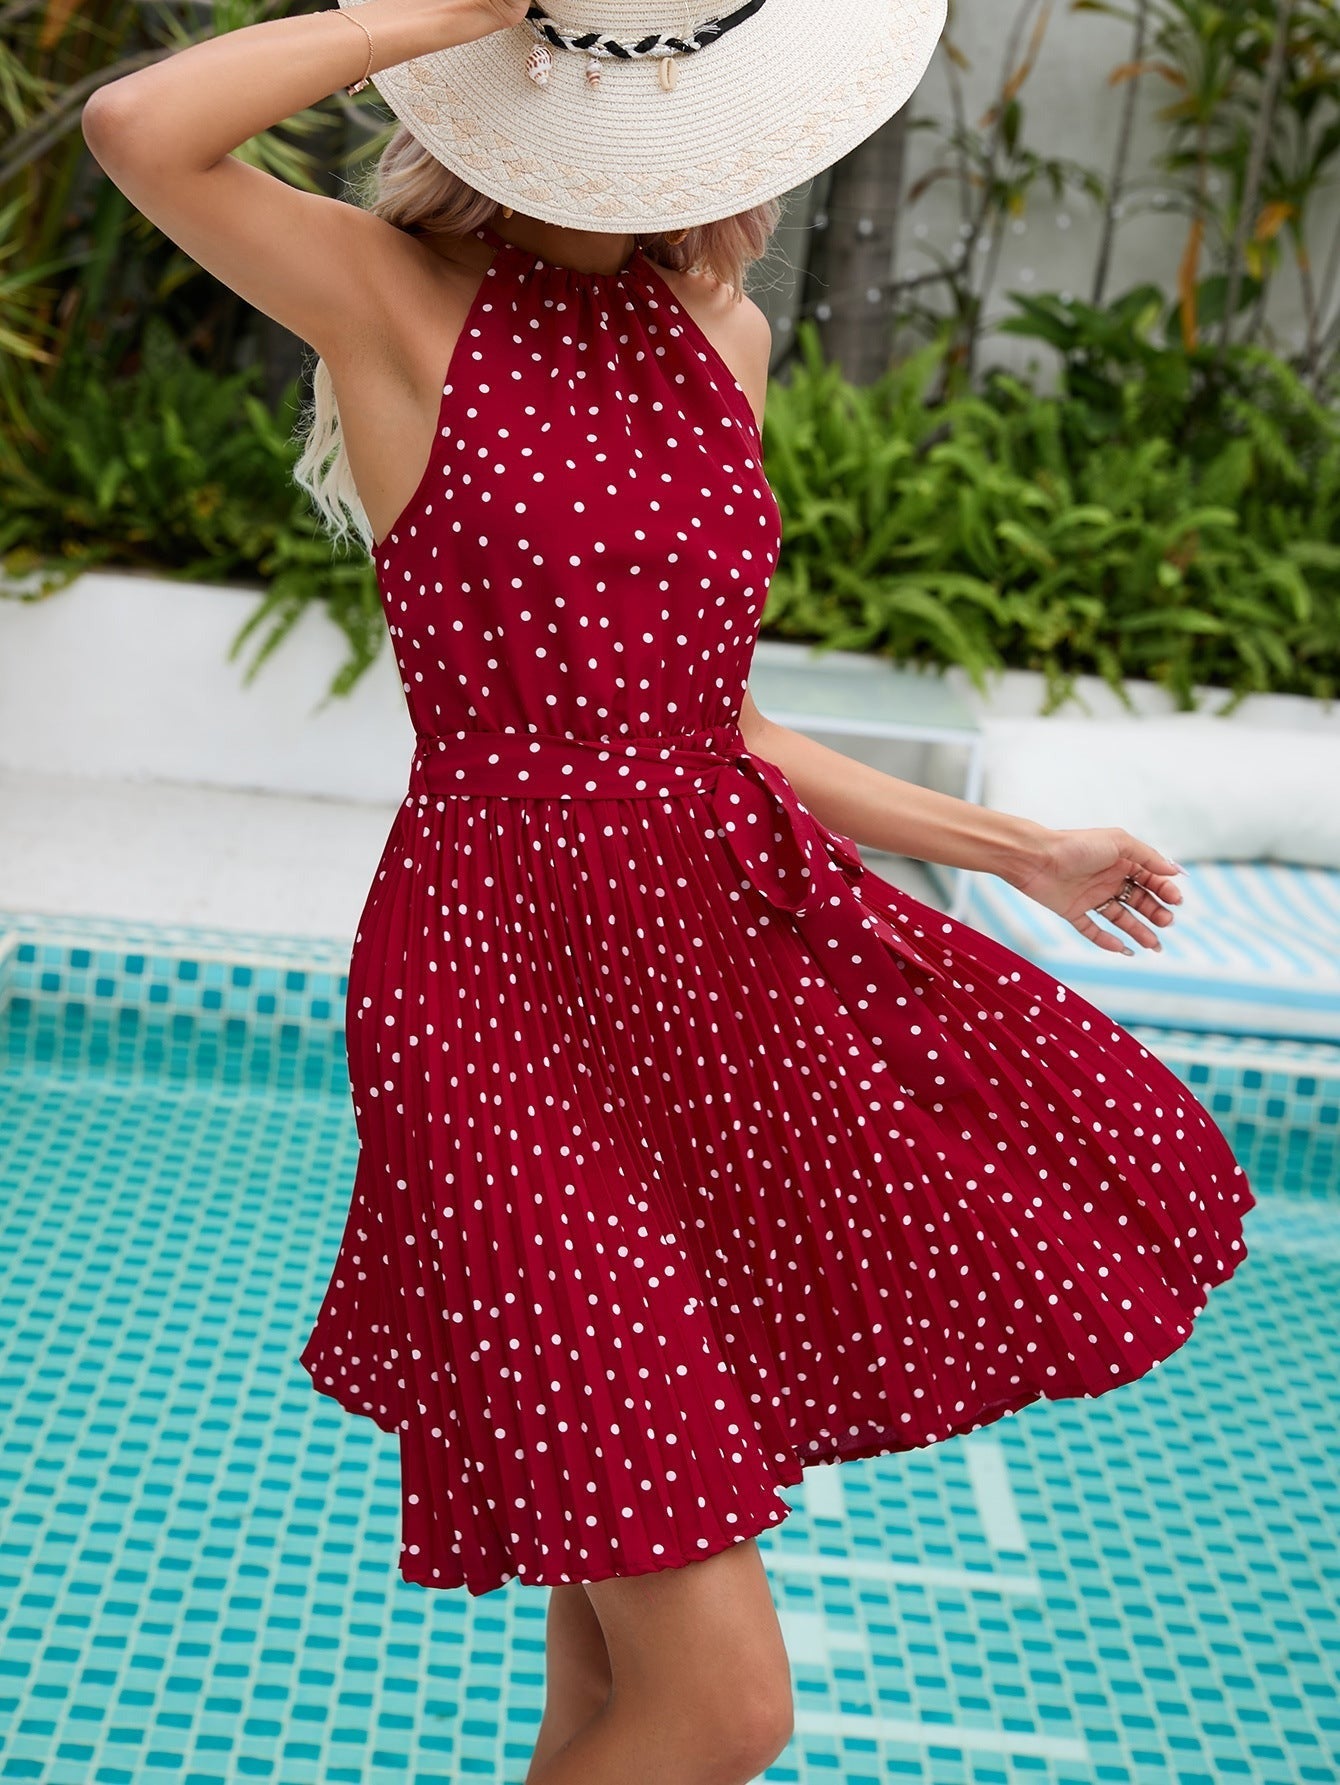 Elegantes Neckholder-Kleid mit Polka Dots-Print, ärmellos